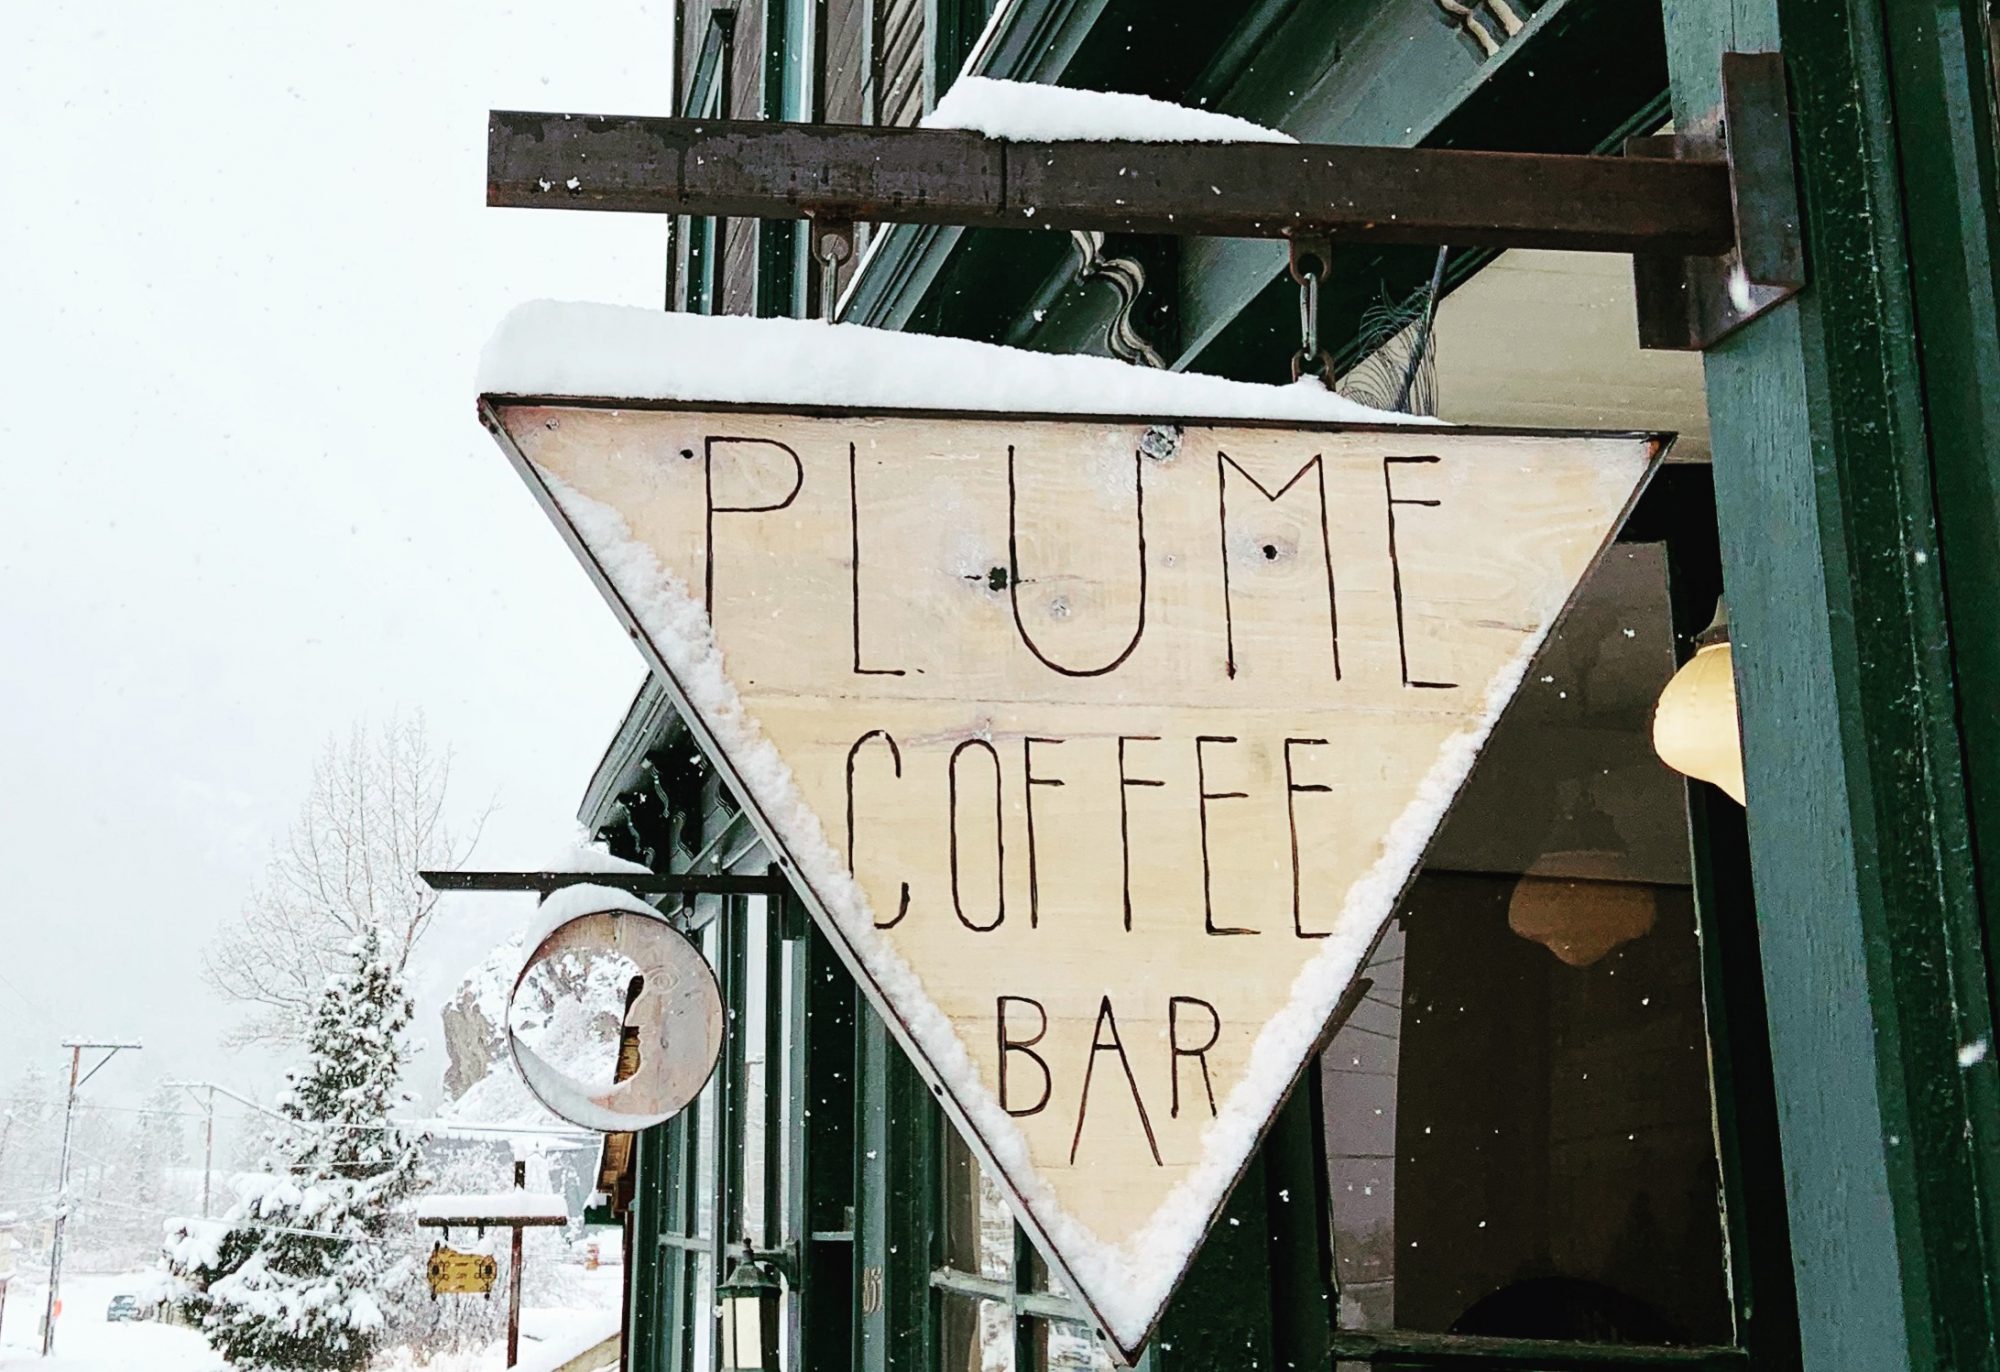 Plume Coffee